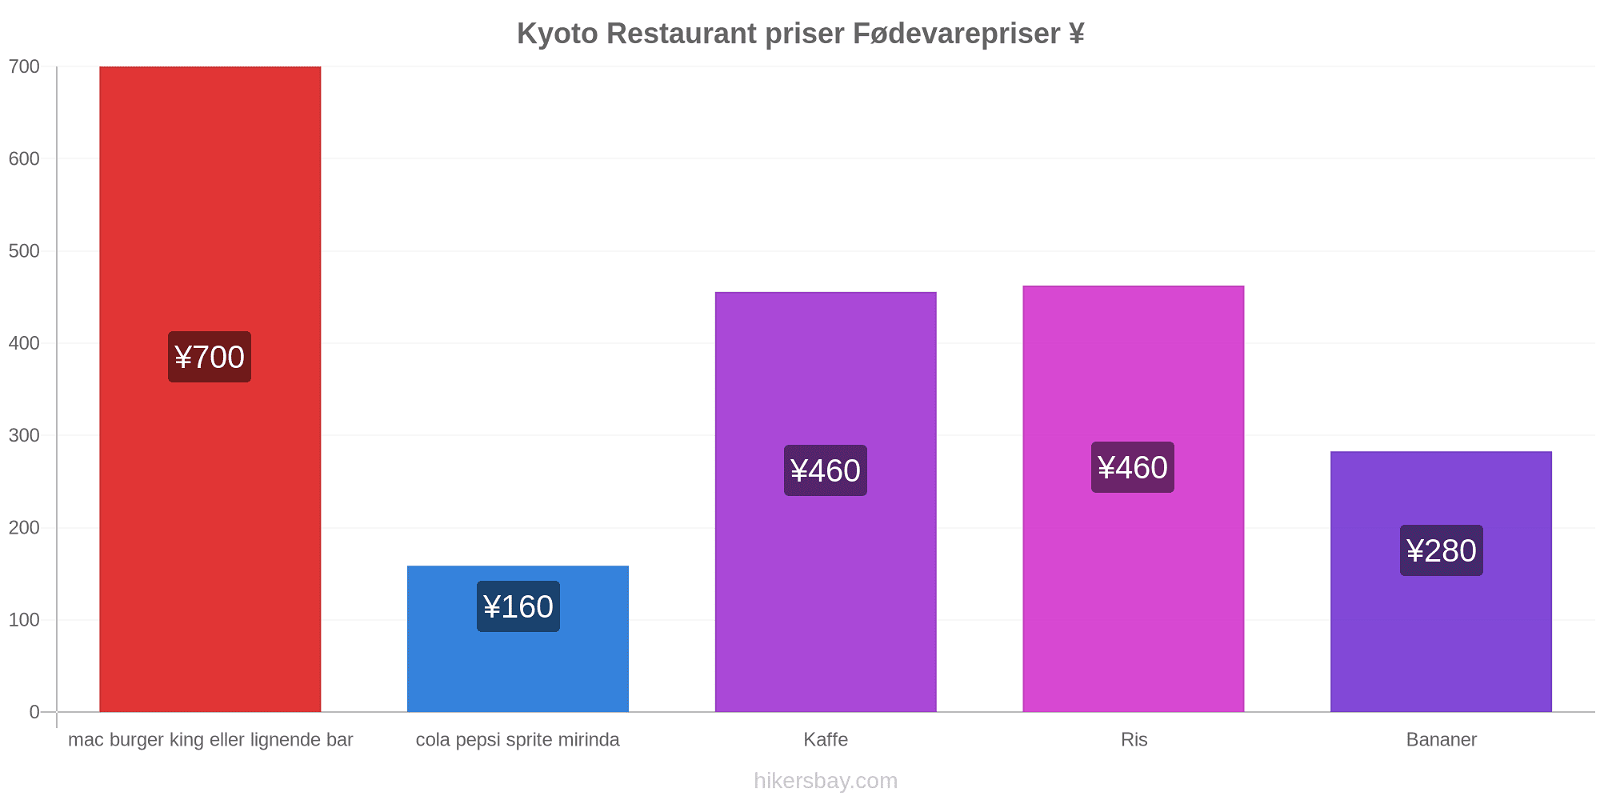 Kyoto prisændringer hikersbay.com